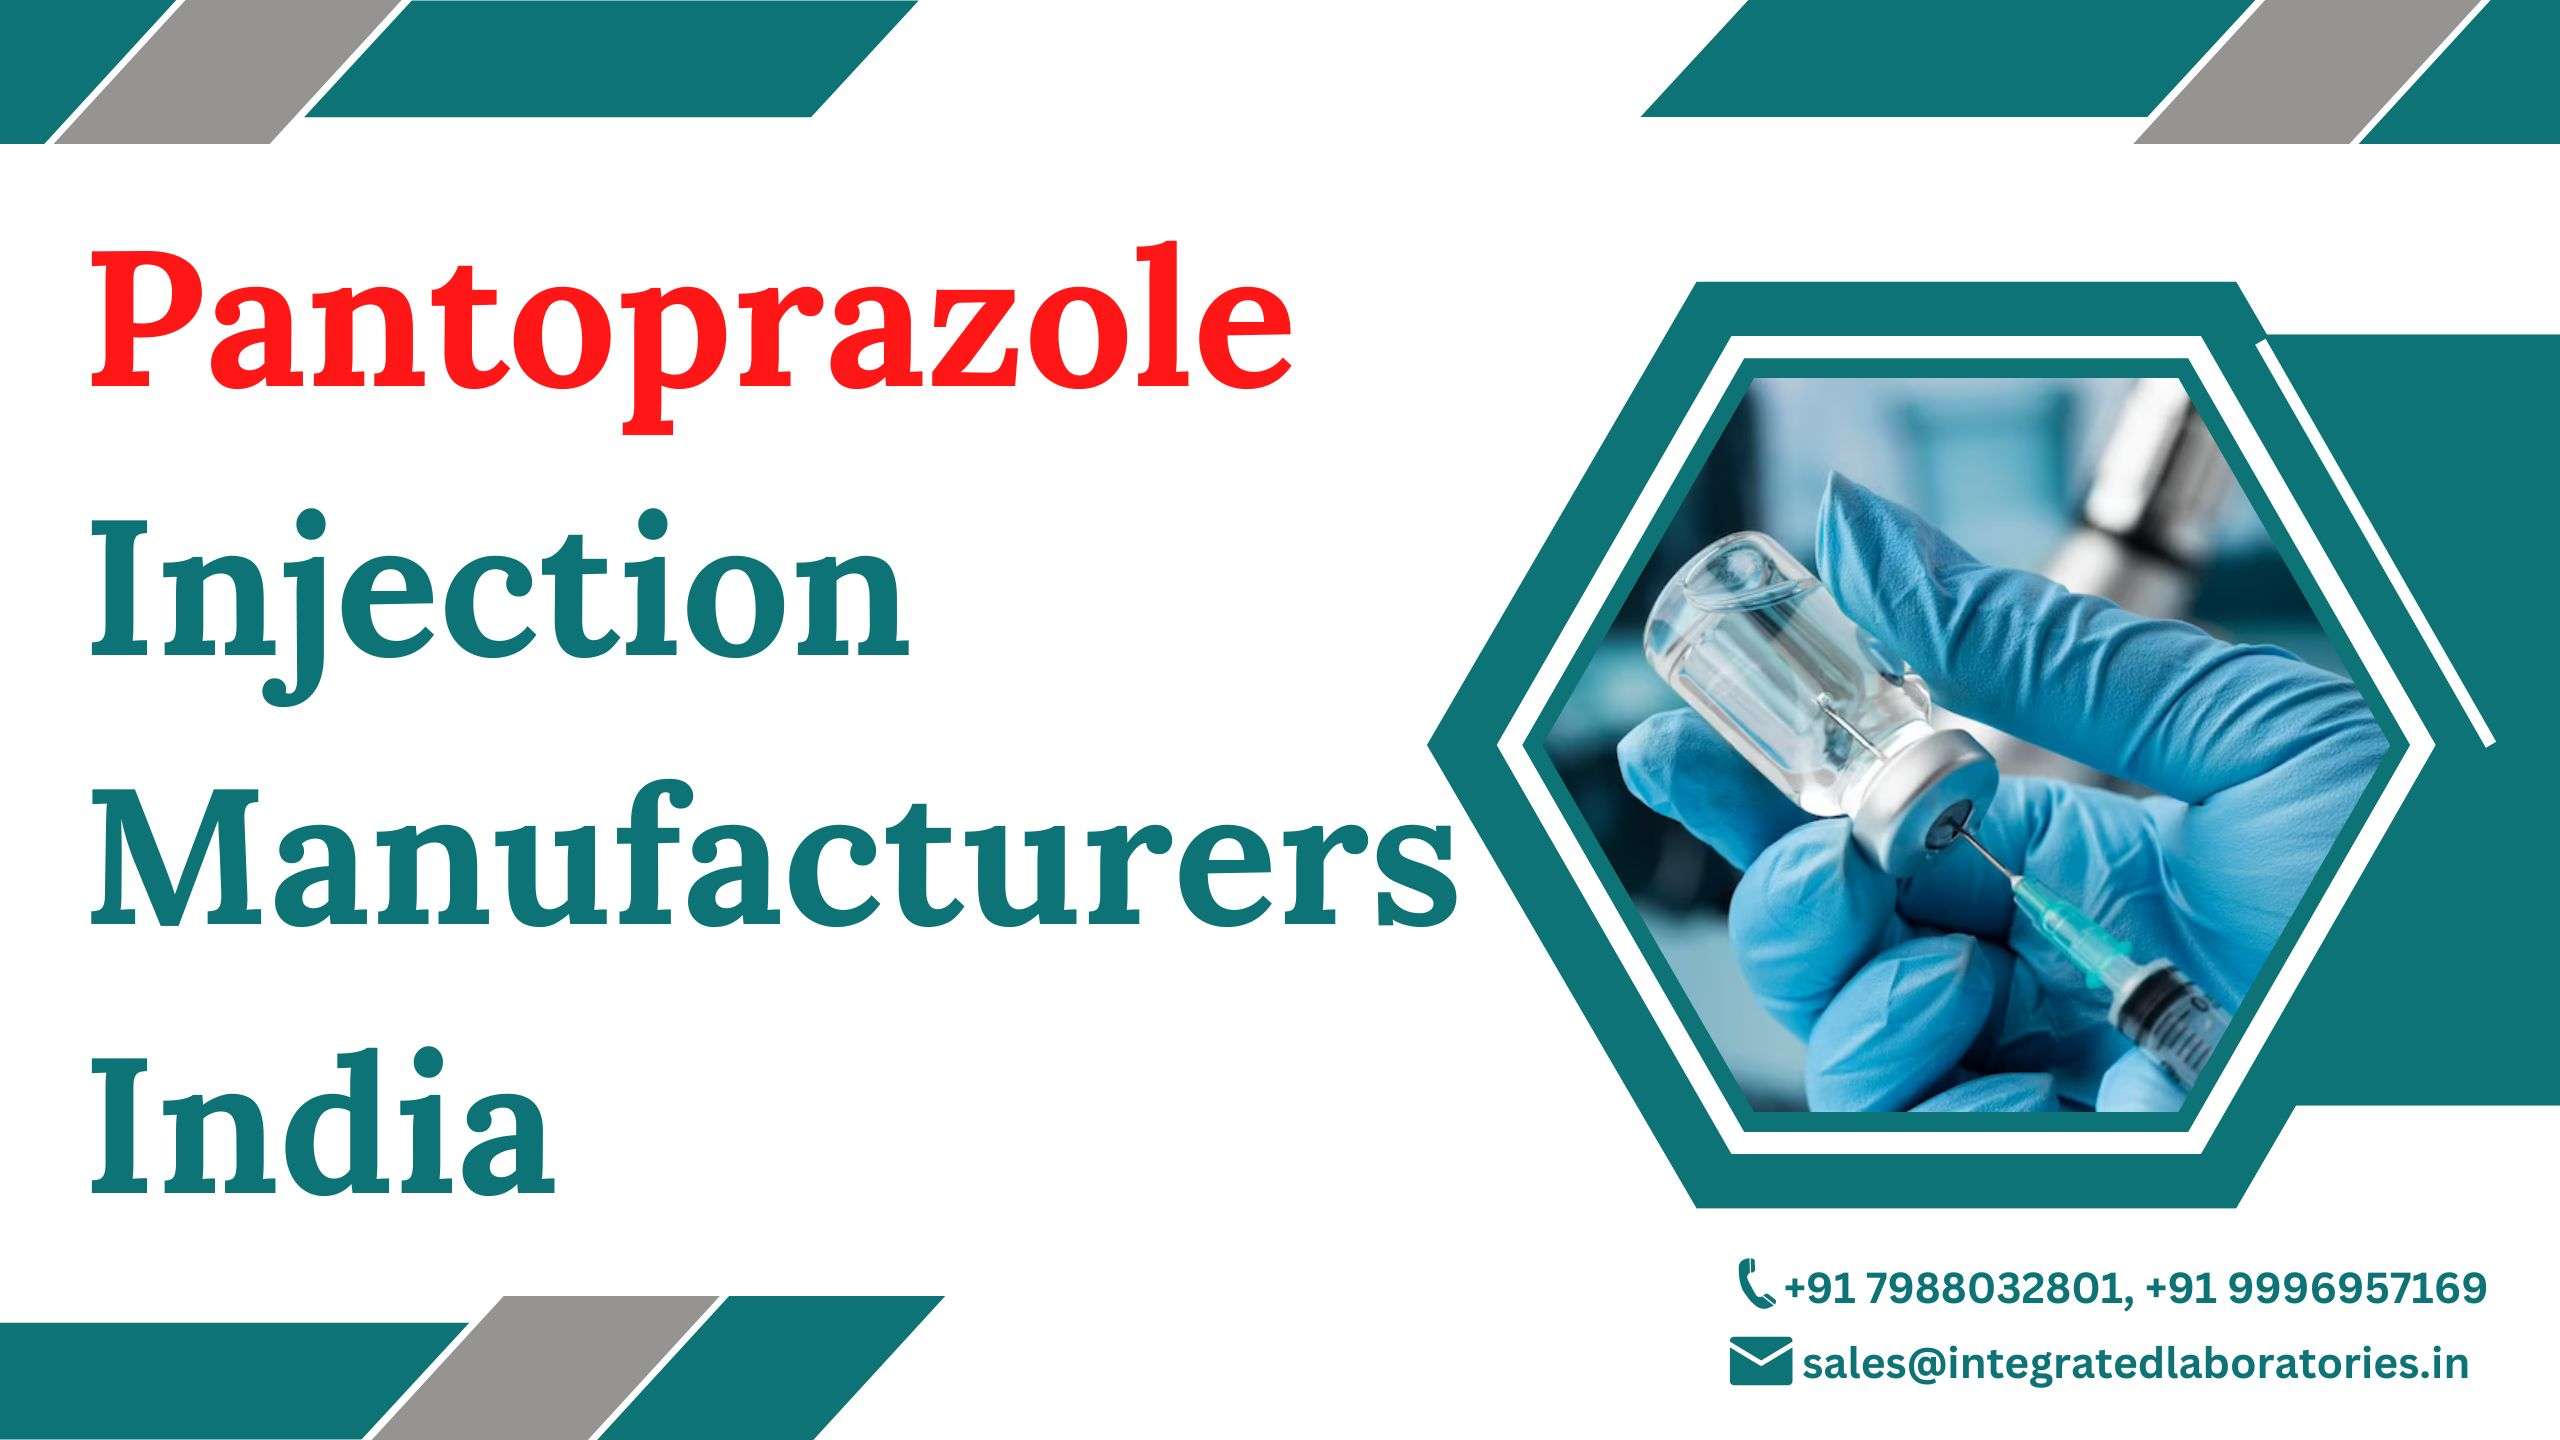 Best Pantoprazole Injection Manufacturers India-Integrated Laboratories